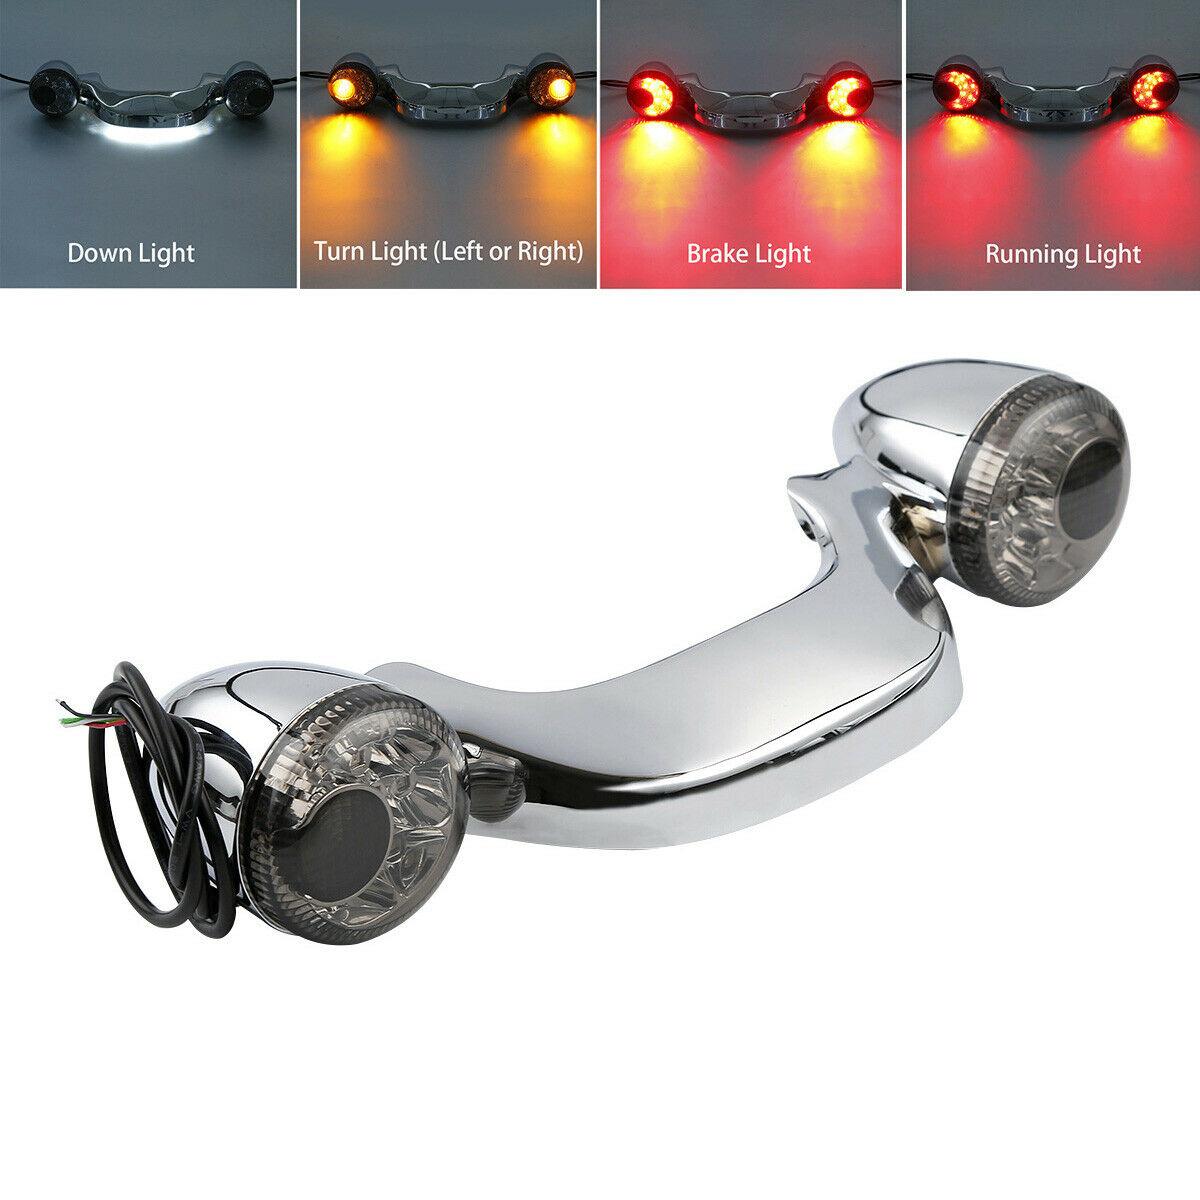 Bullet Rear LED Turn Signal / Brake Light Bar For Harley Street Glide 2010-2021 - Moto Life Products